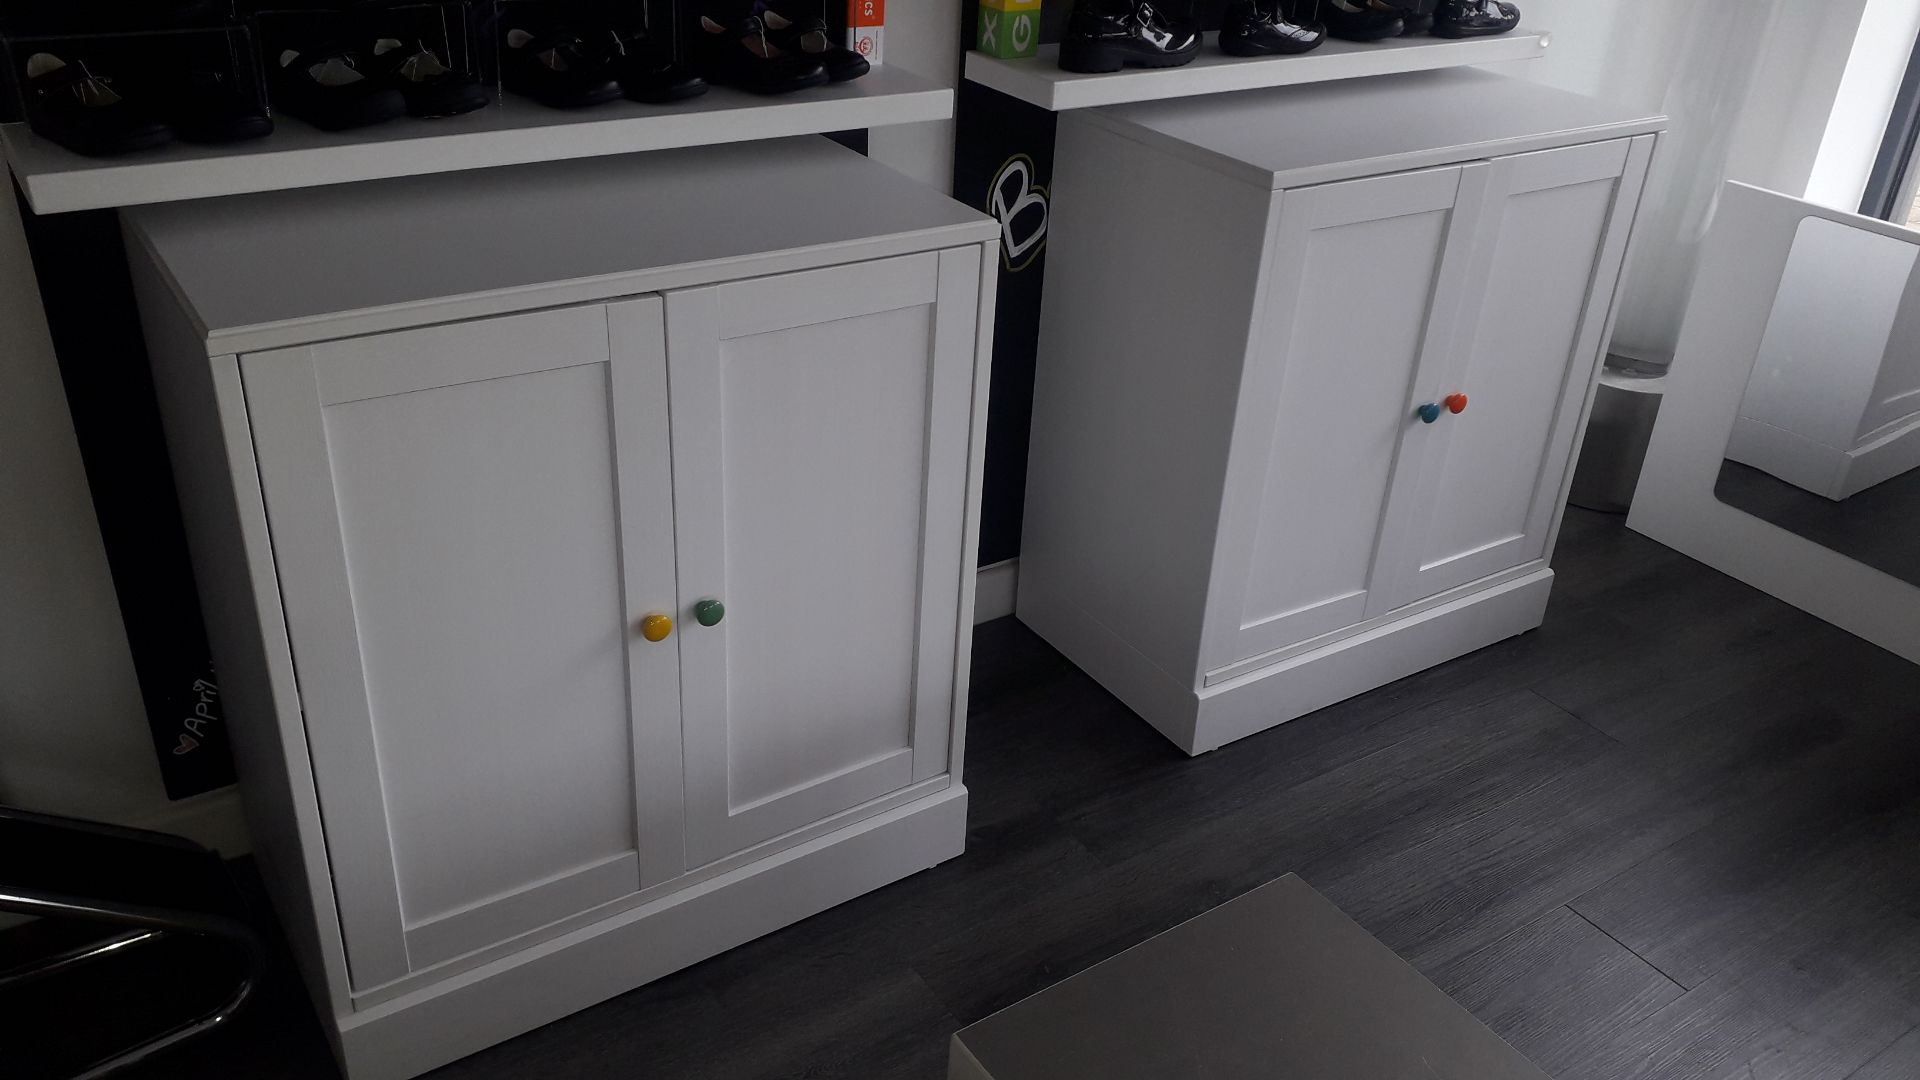 4 x Twin Door Ikea cabinets – contents excluded